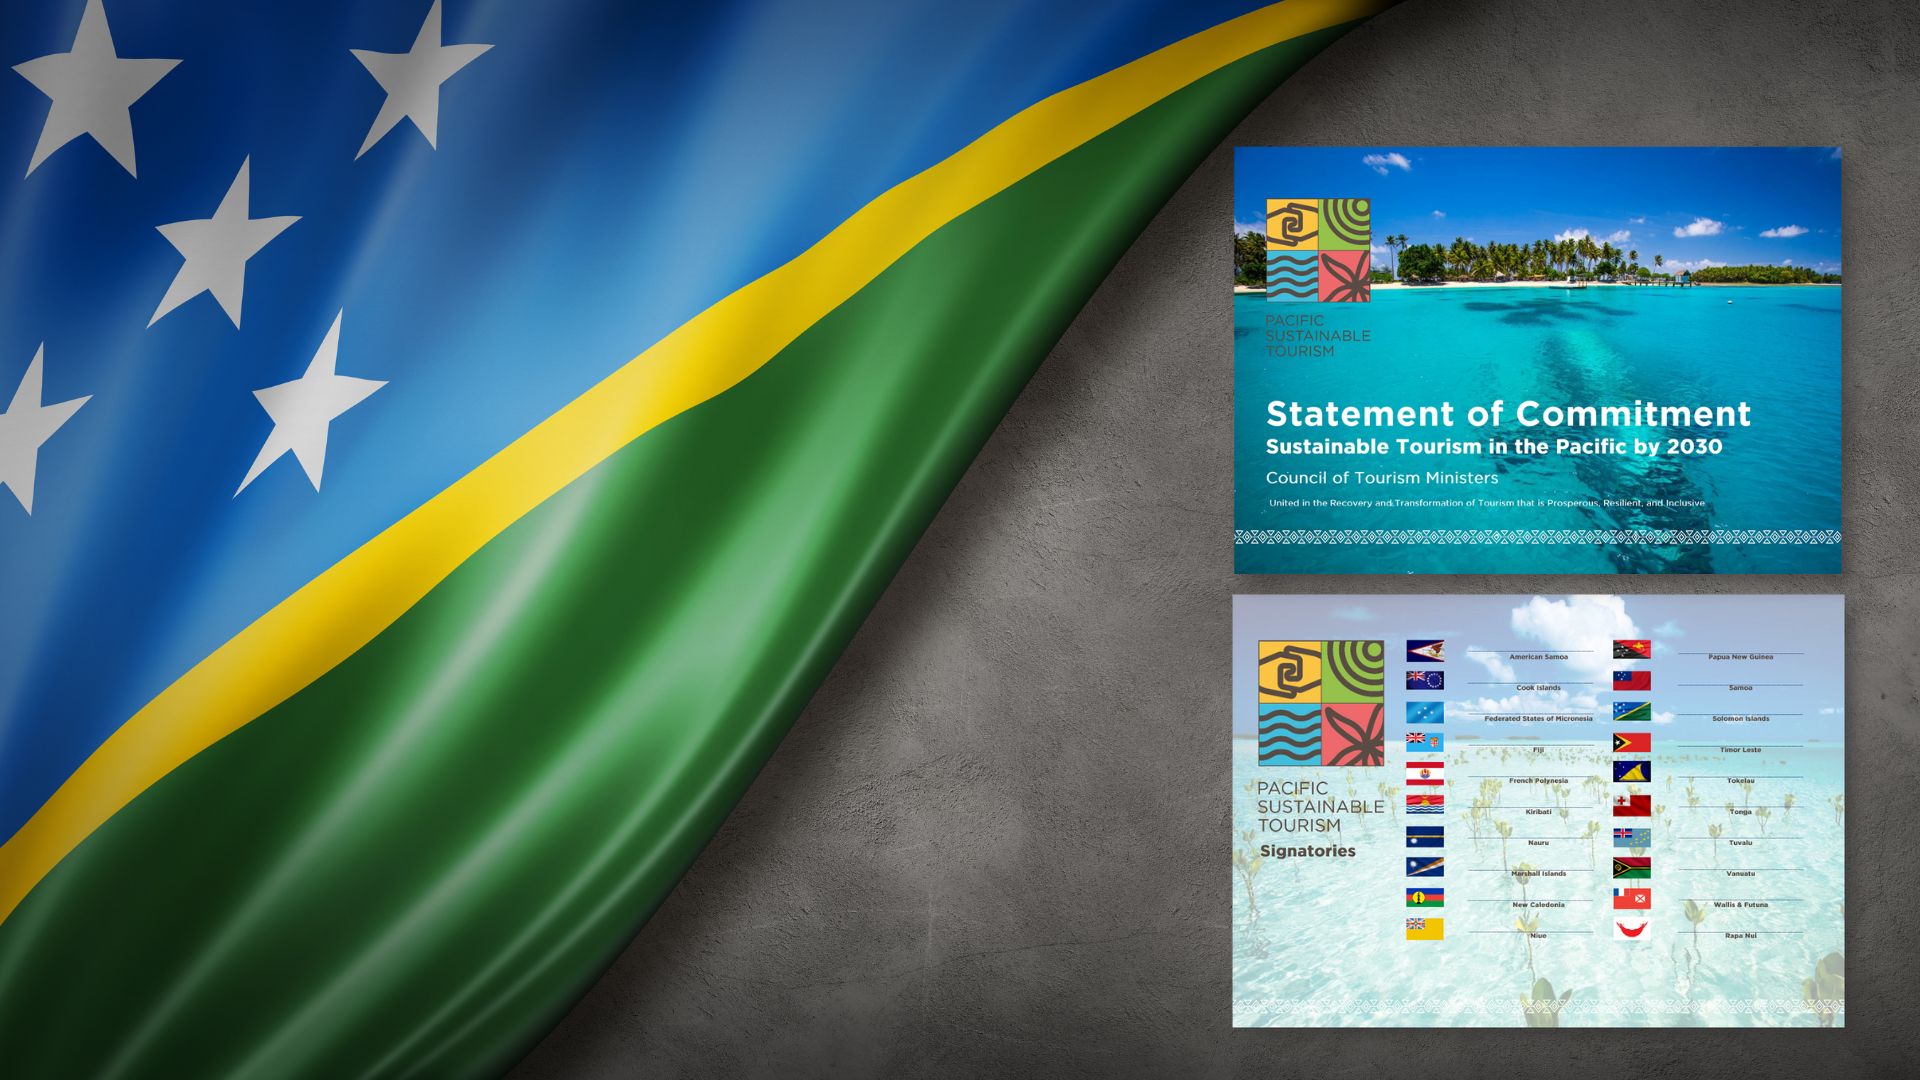 Solomon Islands Endorses Pacific Sustainable Tourism Statement of Commitment